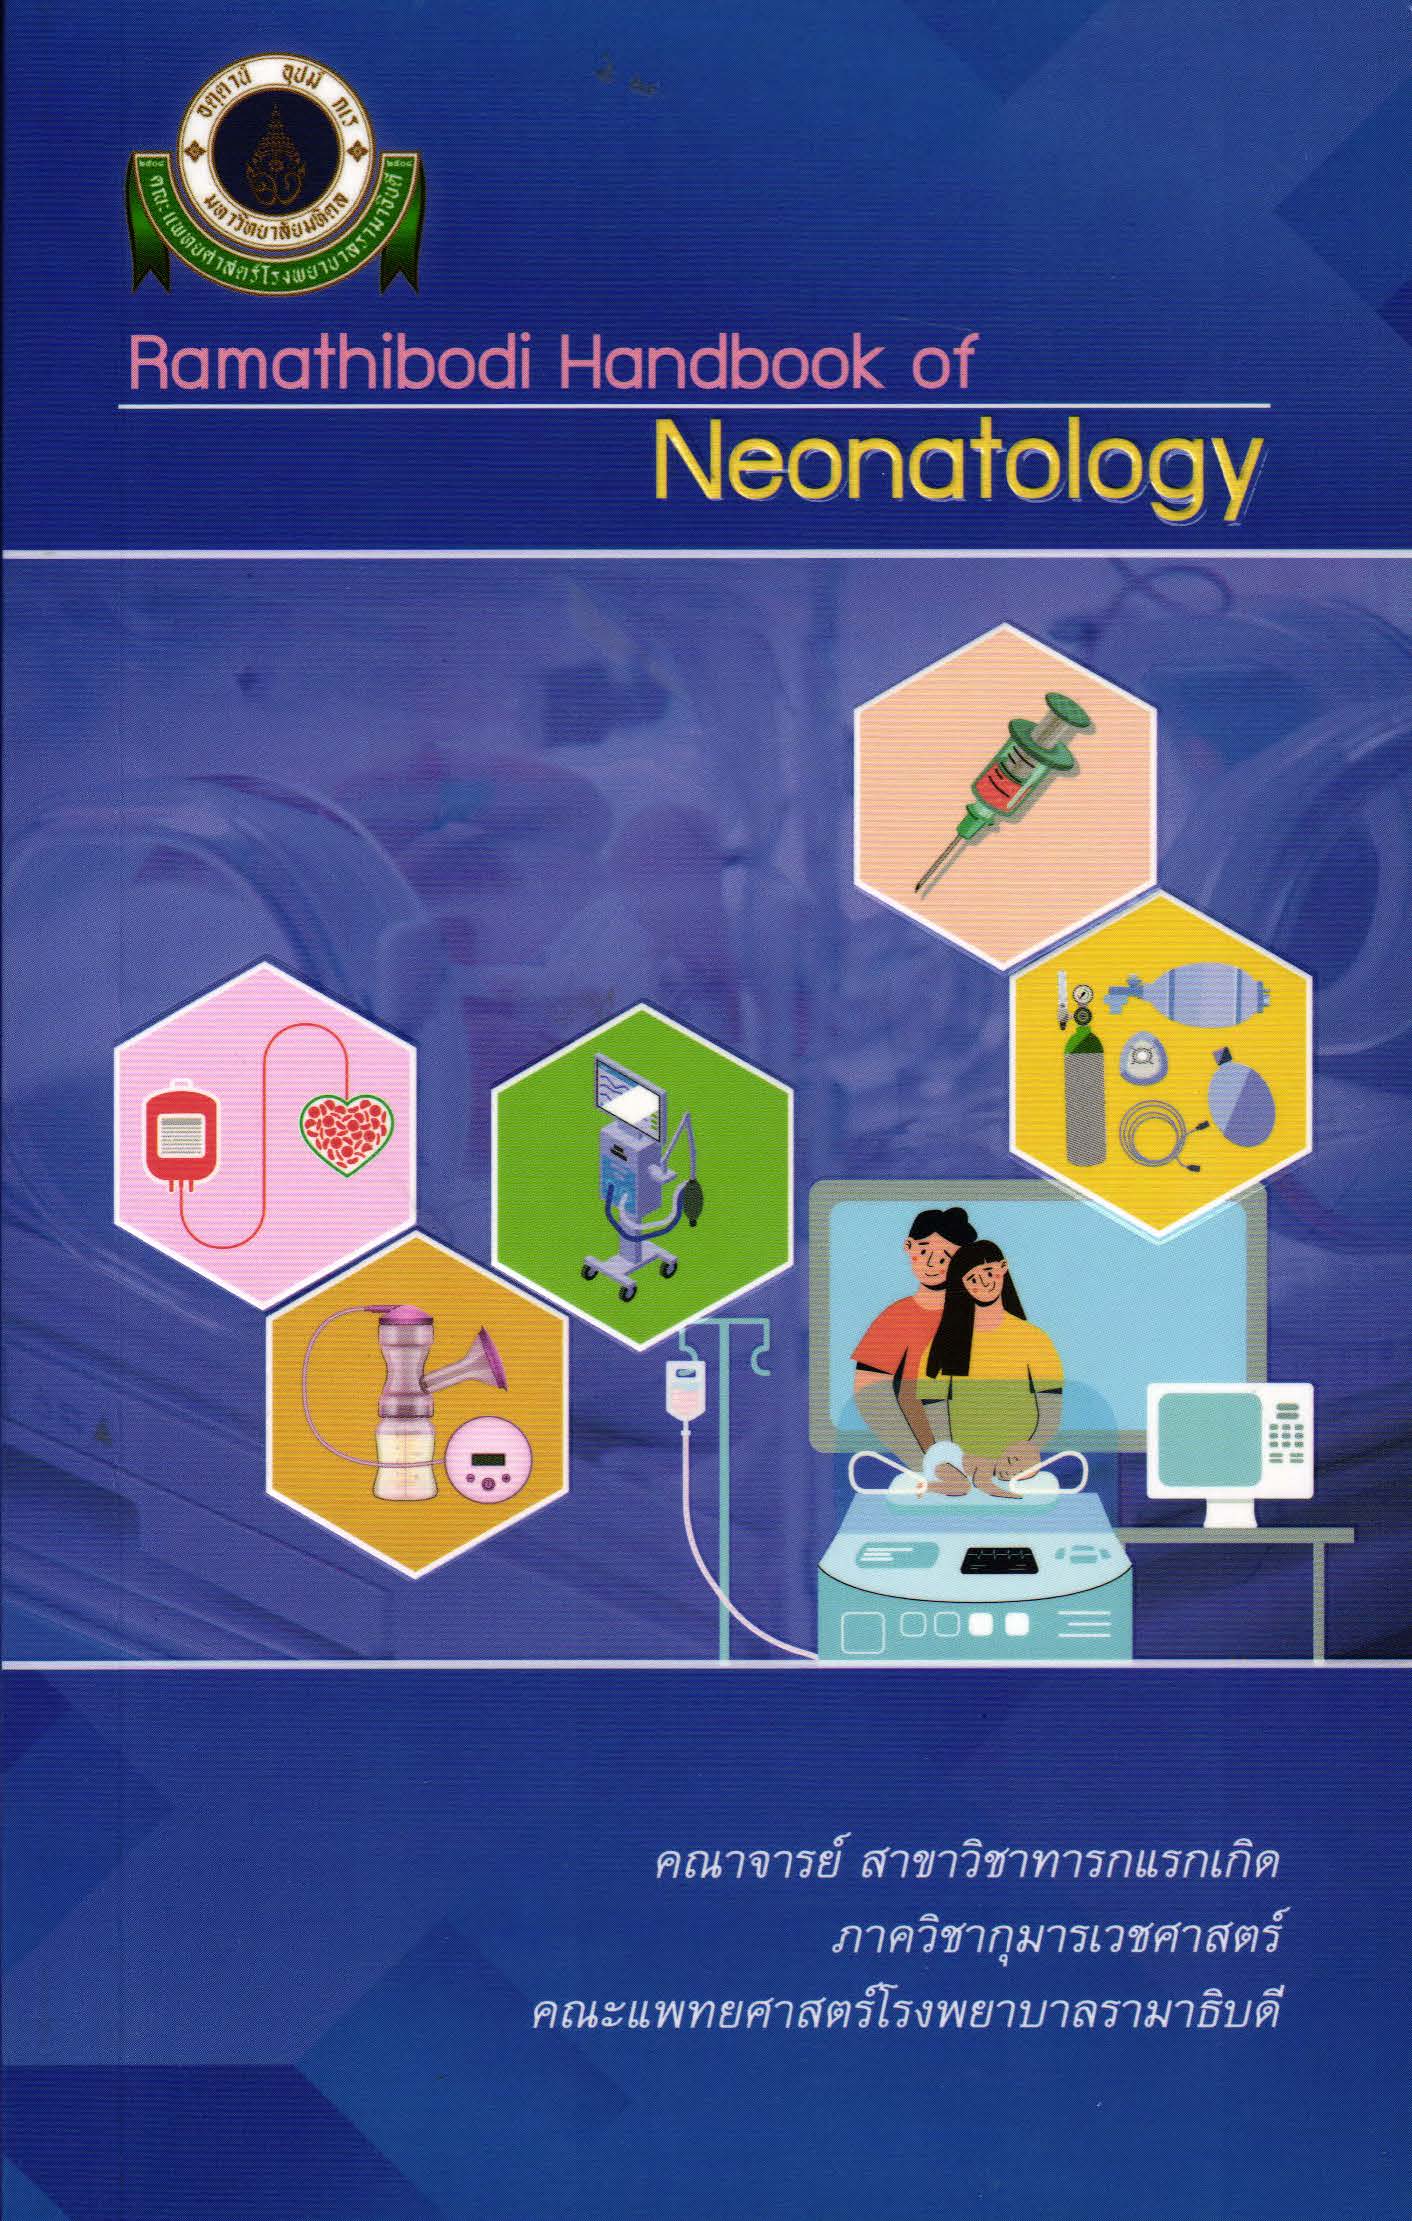 Ramathibodi Handbook of Neonatology